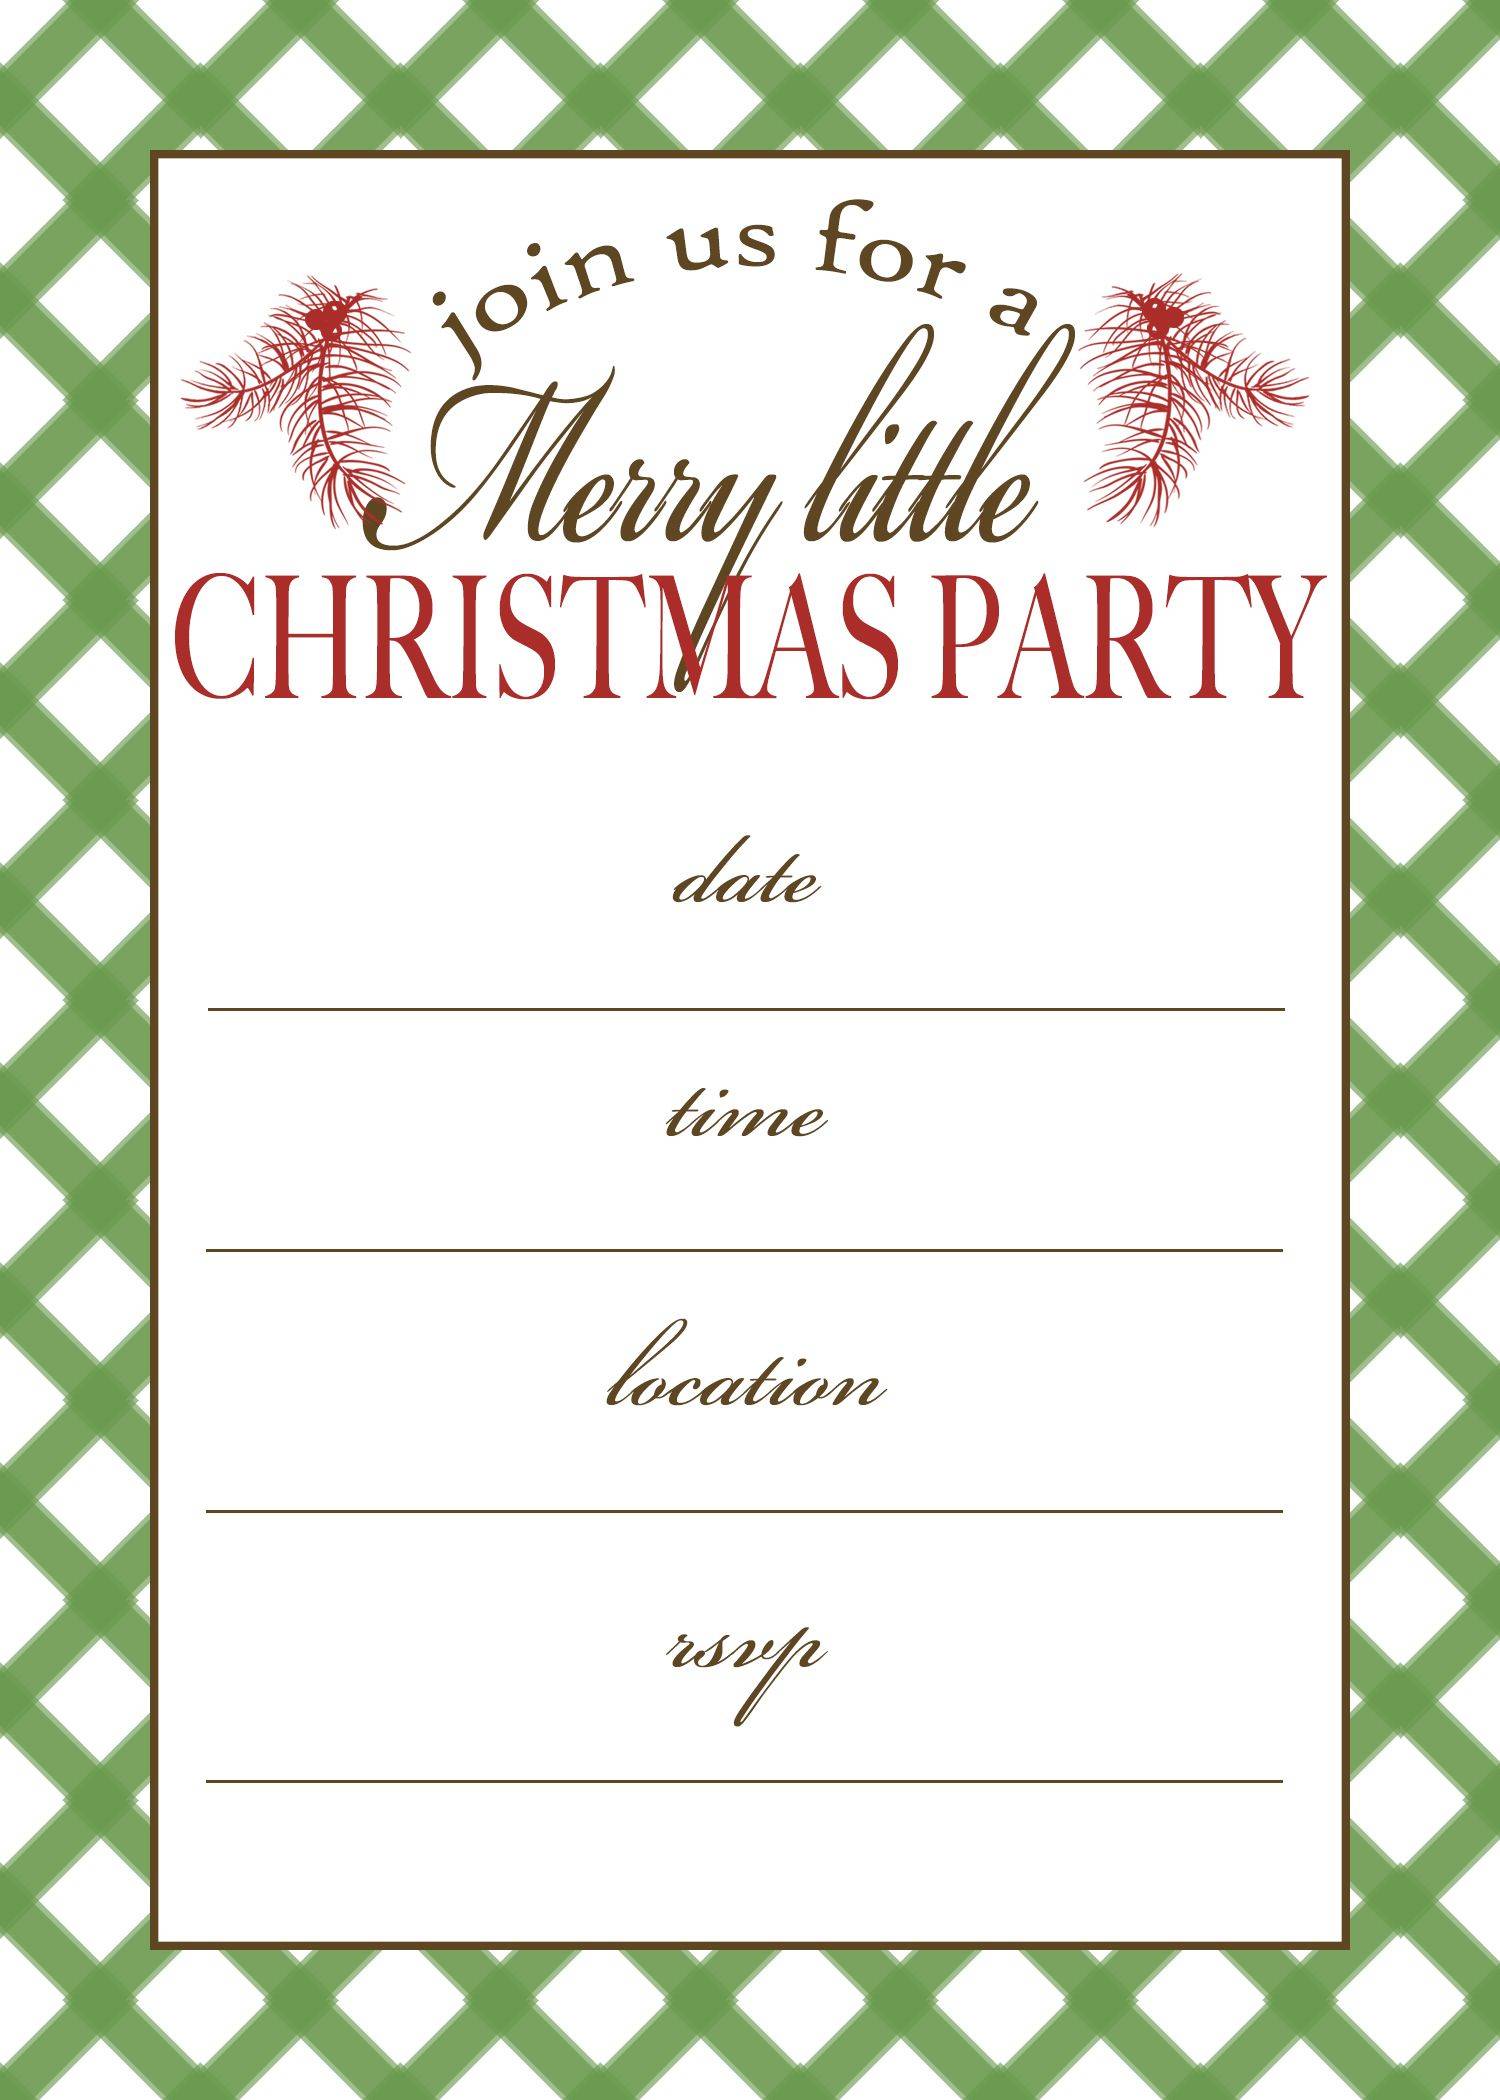 Sample Christmas Card Invitation Letter | Home Design